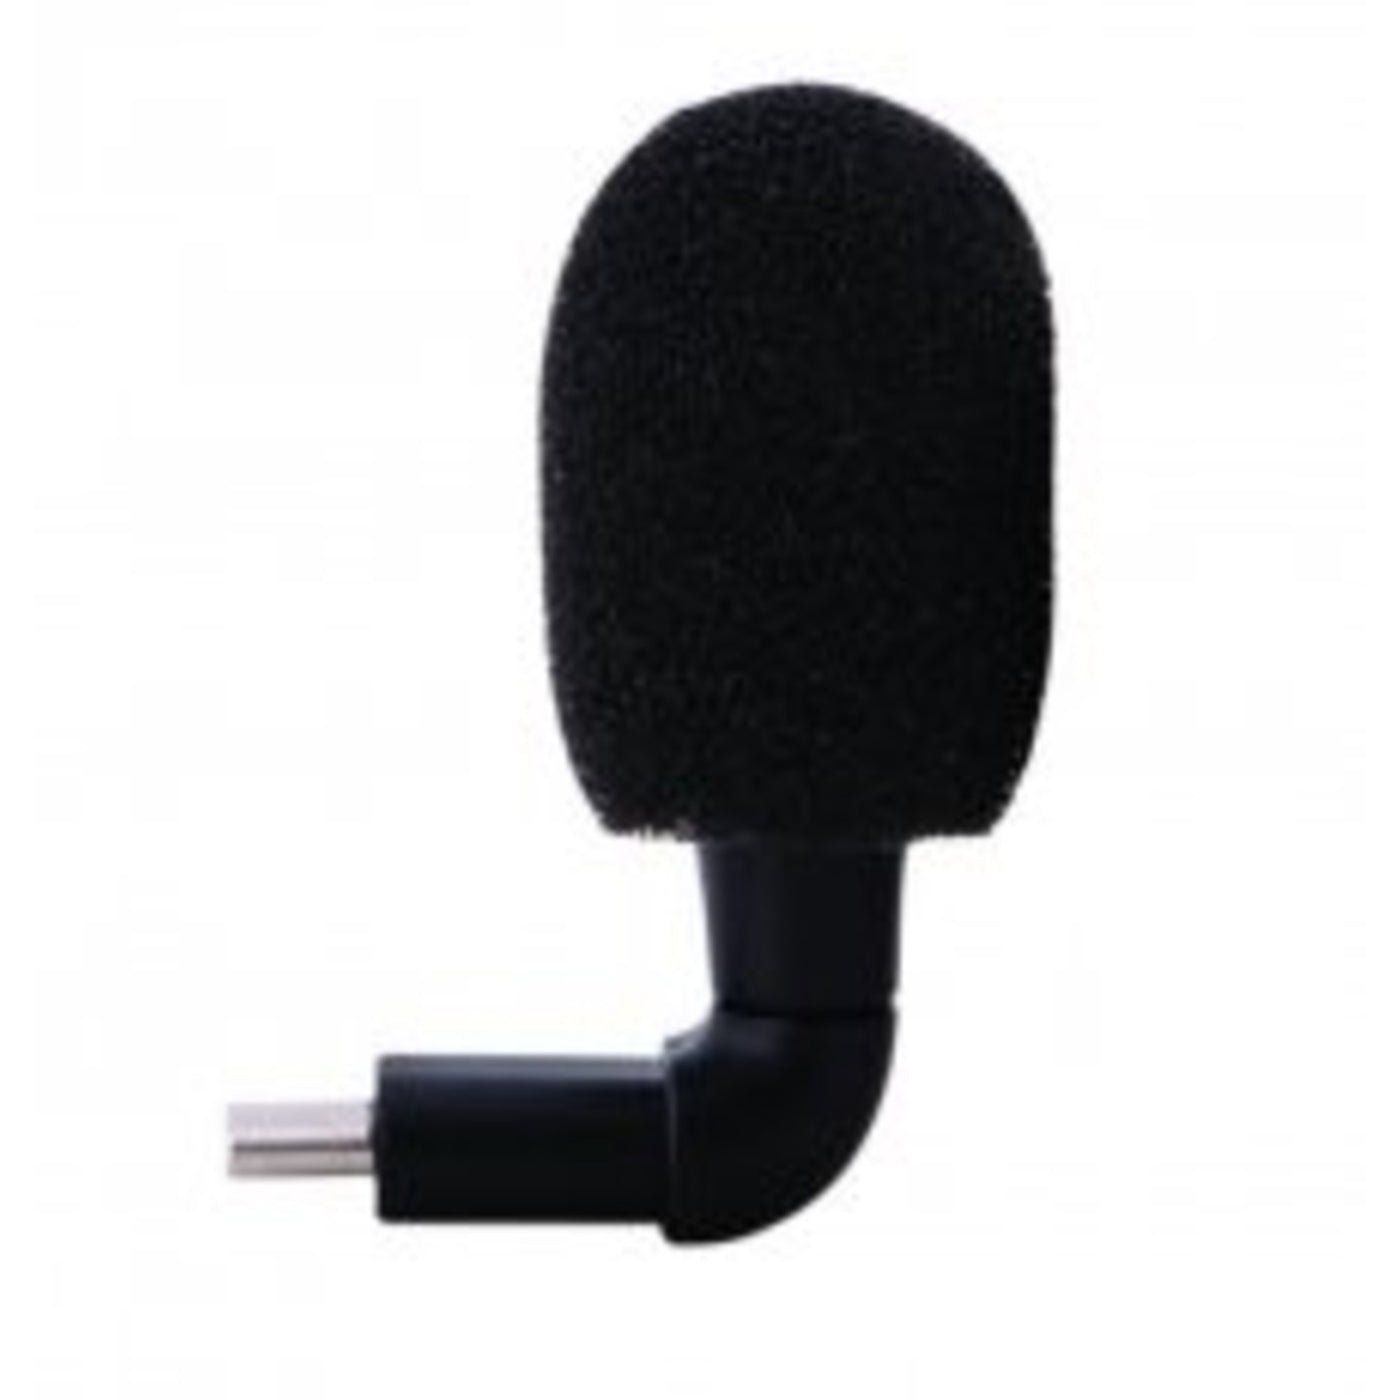 CAD Audio PM100 PodMaster Mini Condenser Microphone with USB-C Connector (PM100)